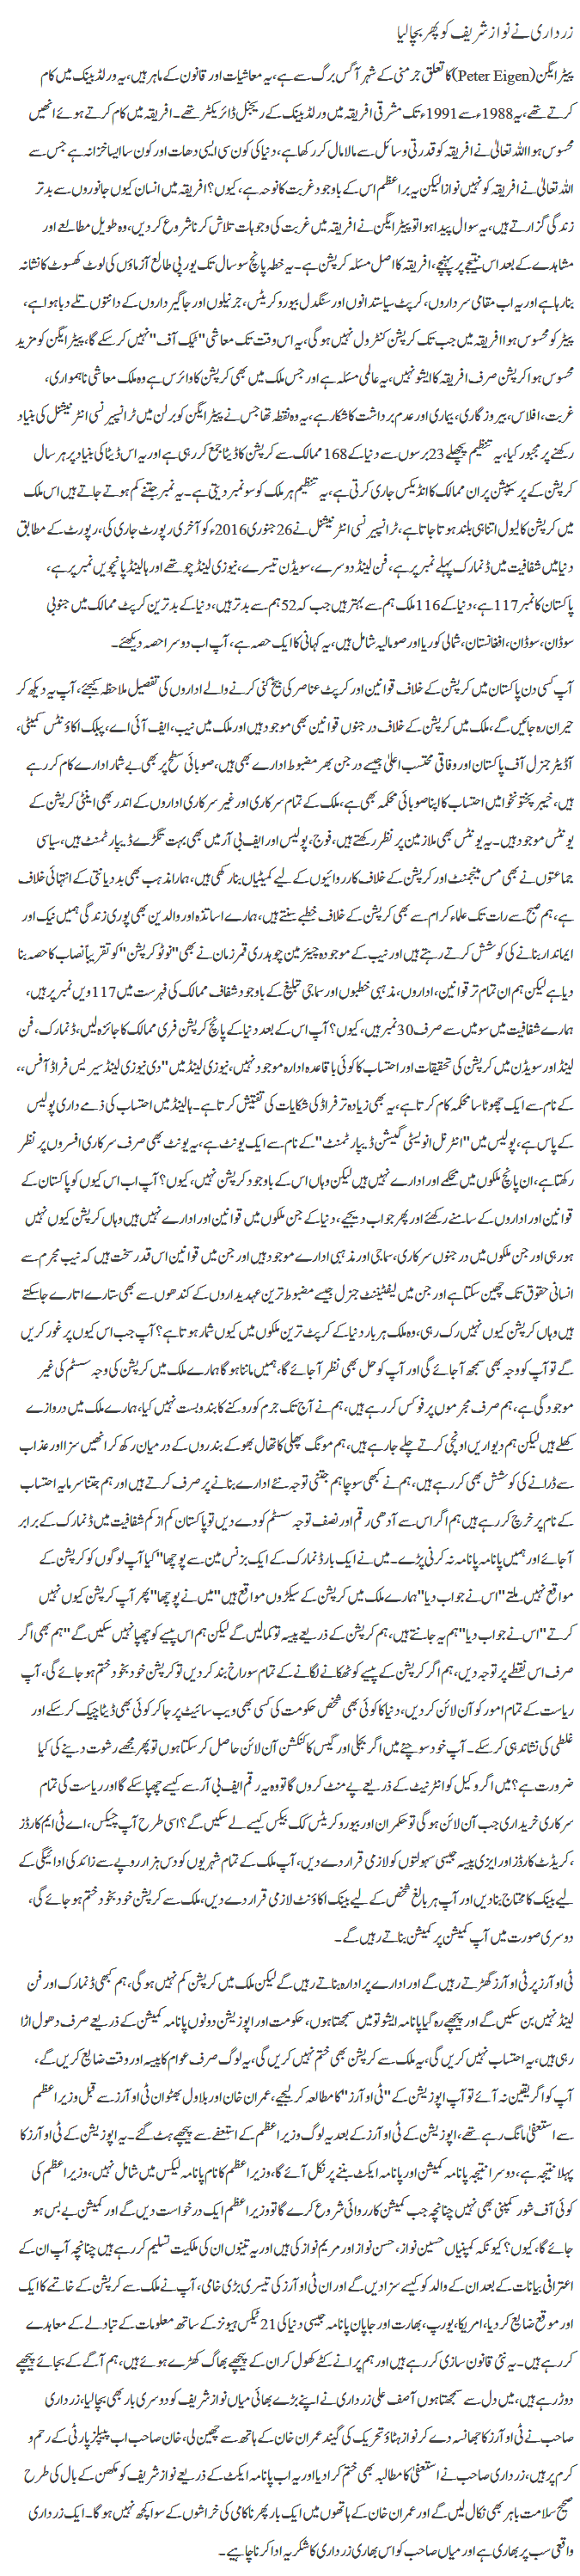 Zardari ne nawaz sharif ko phir bacha lia By Javed Chaudhry